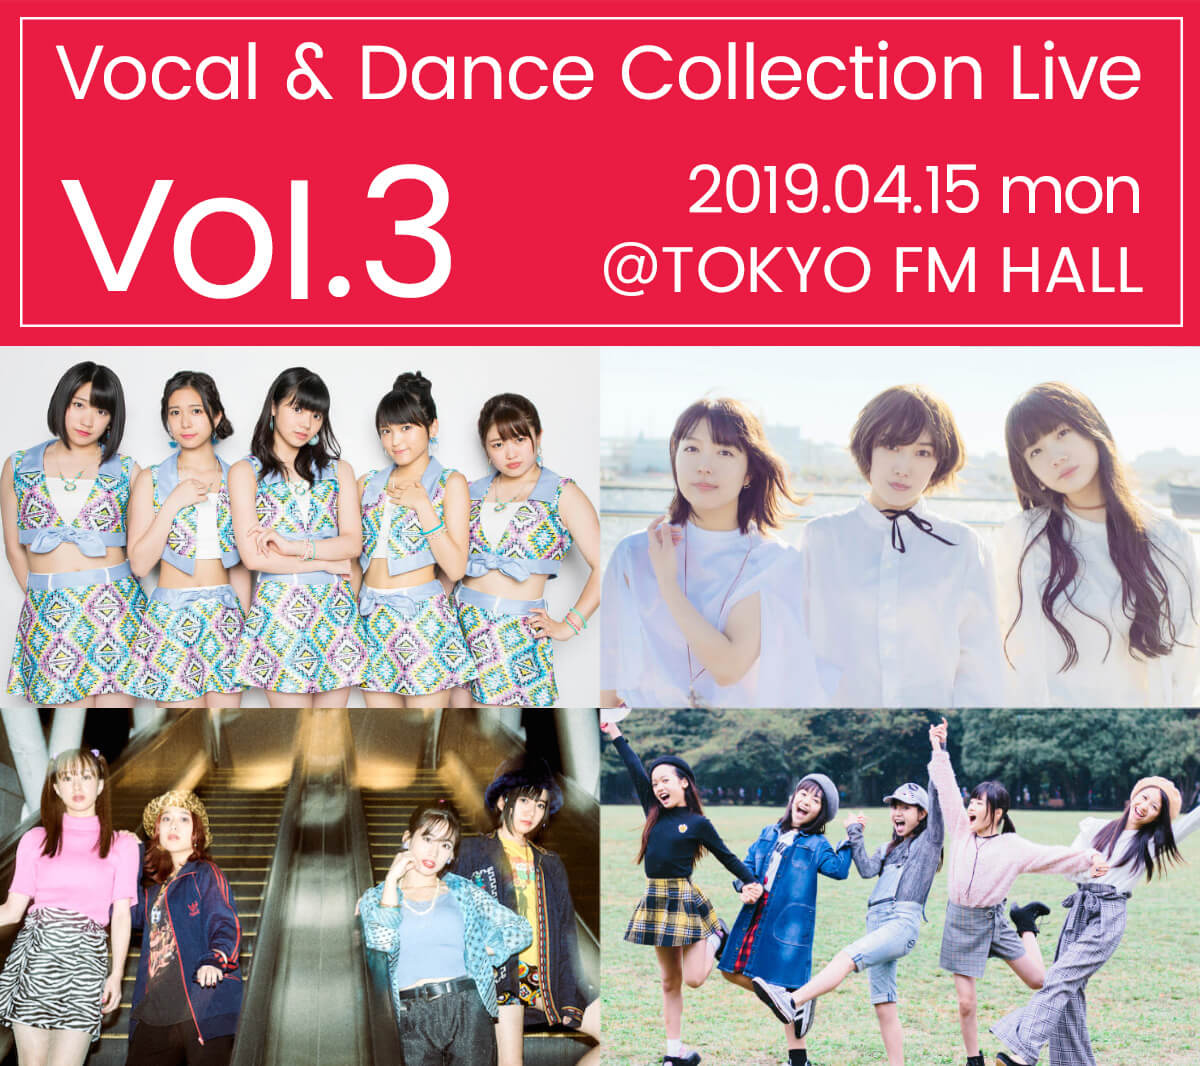 Vocal & Dance Collection Live Vol.3